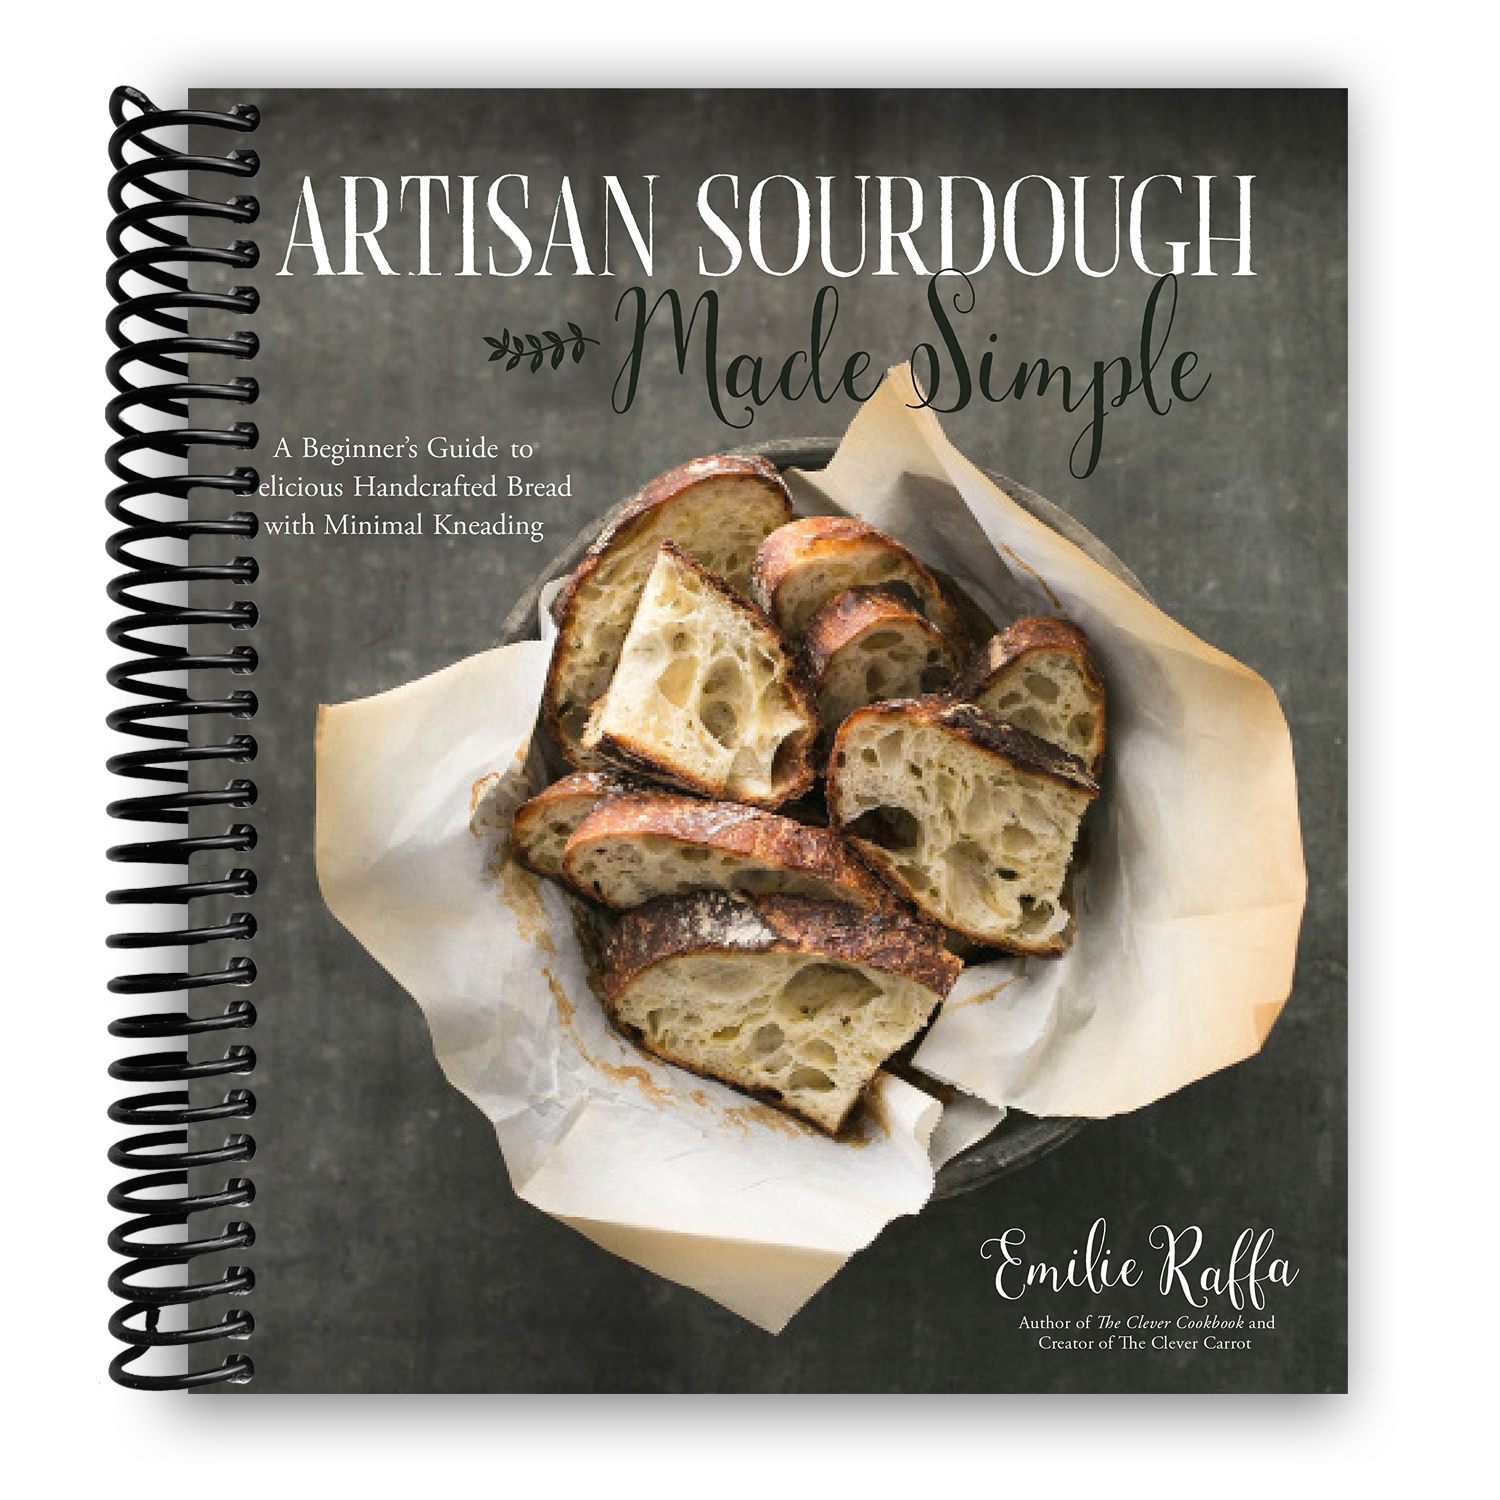 The Sourdough Artist Book